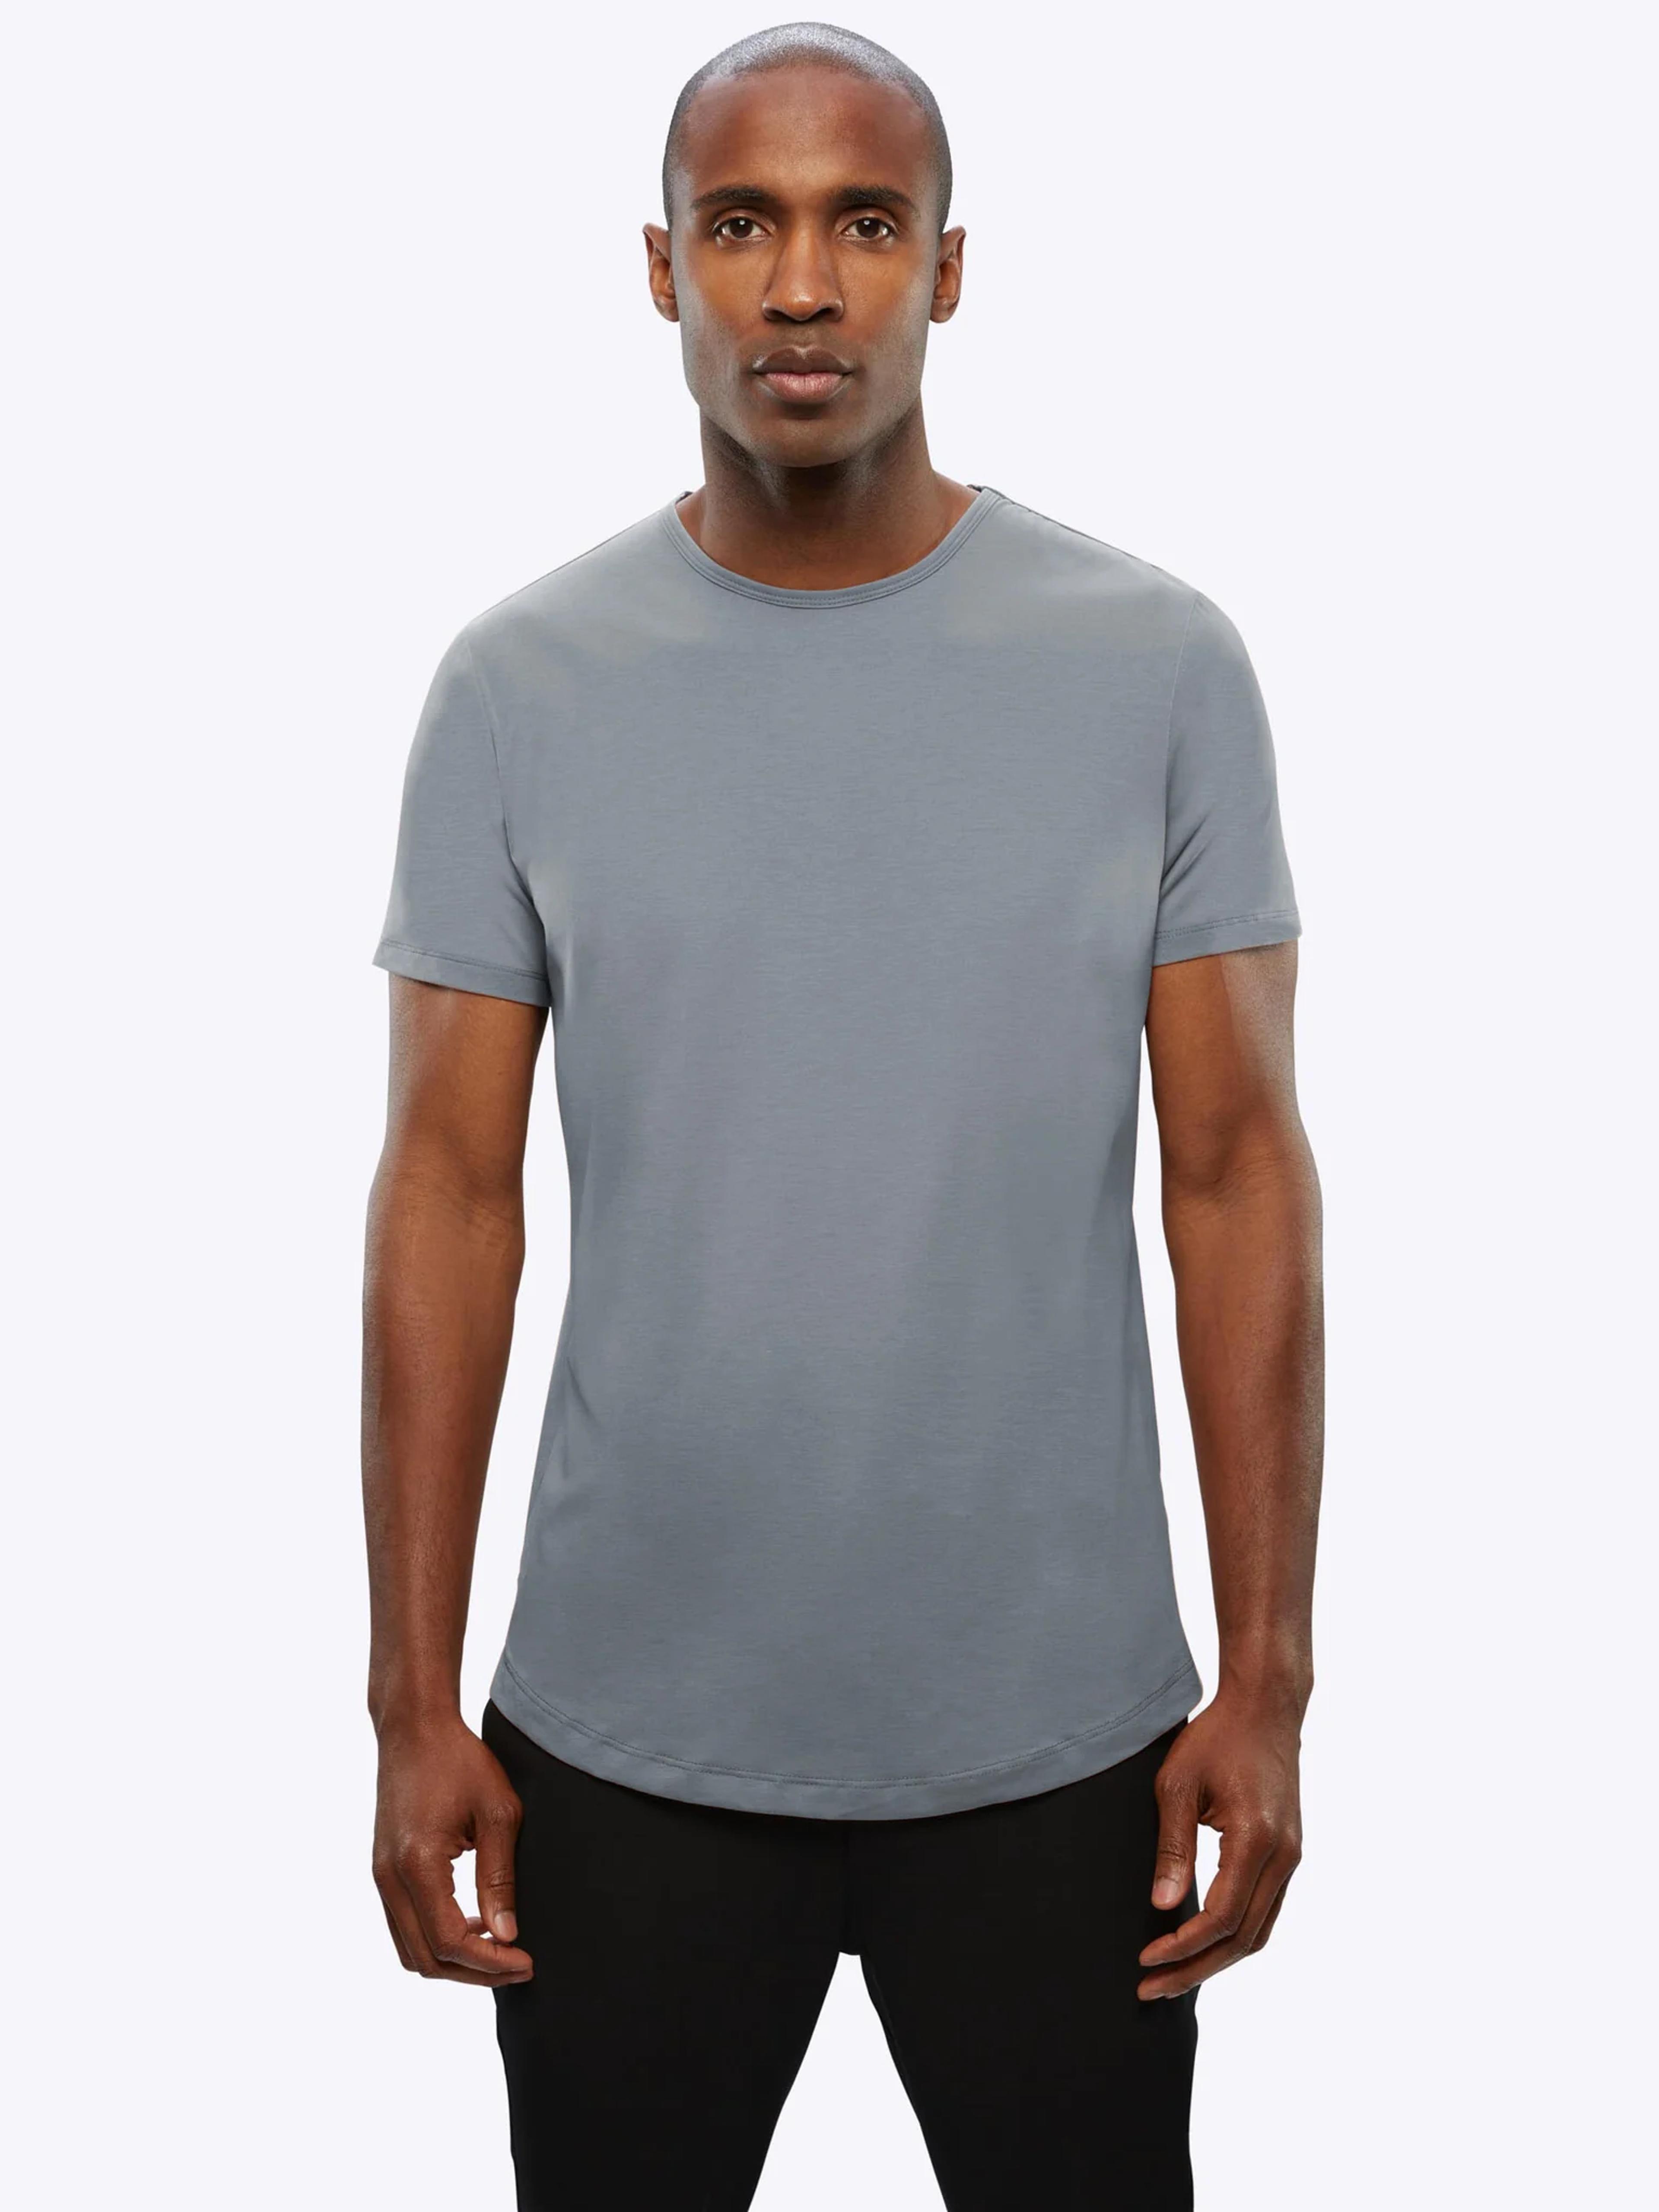 Model wearing space grey Cuts brand t-Shirt